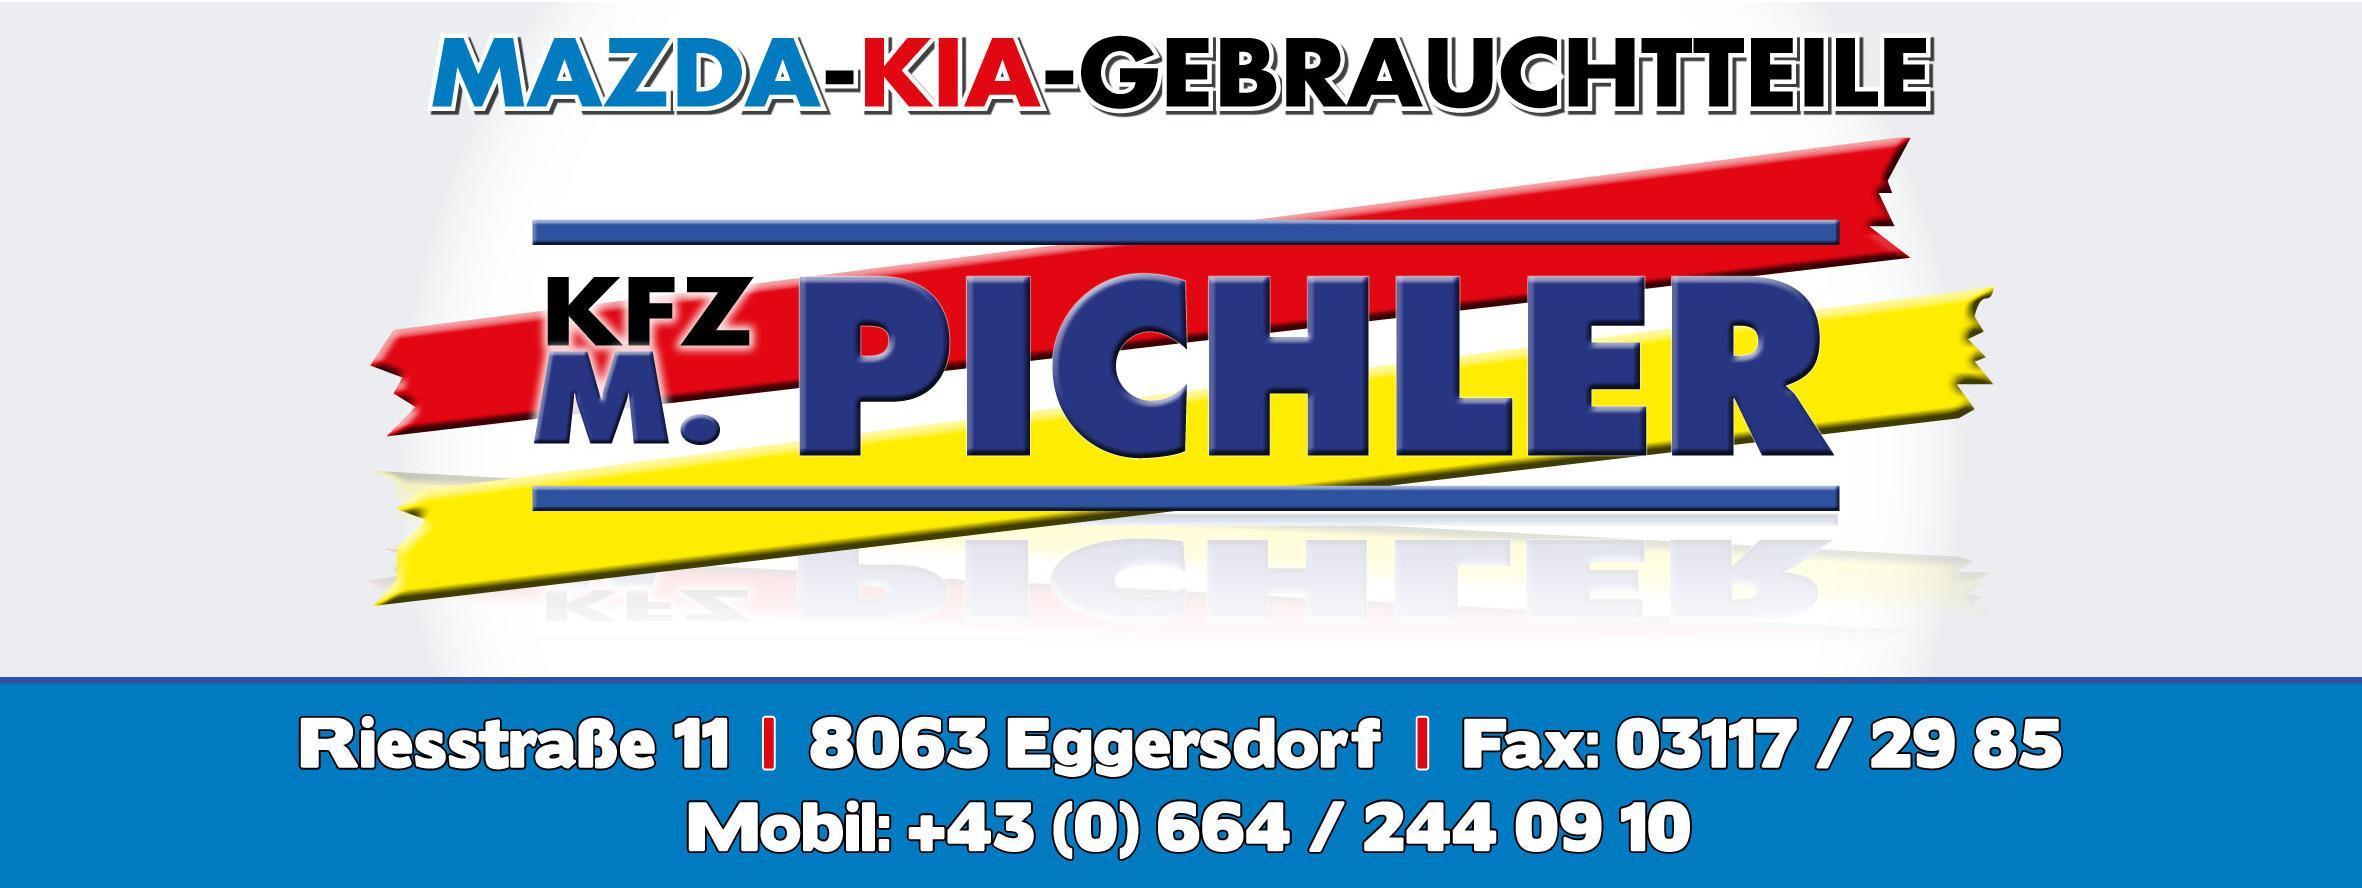 Logo KFZ M. Pichler MAZDA & KIA Gebrauchtteile